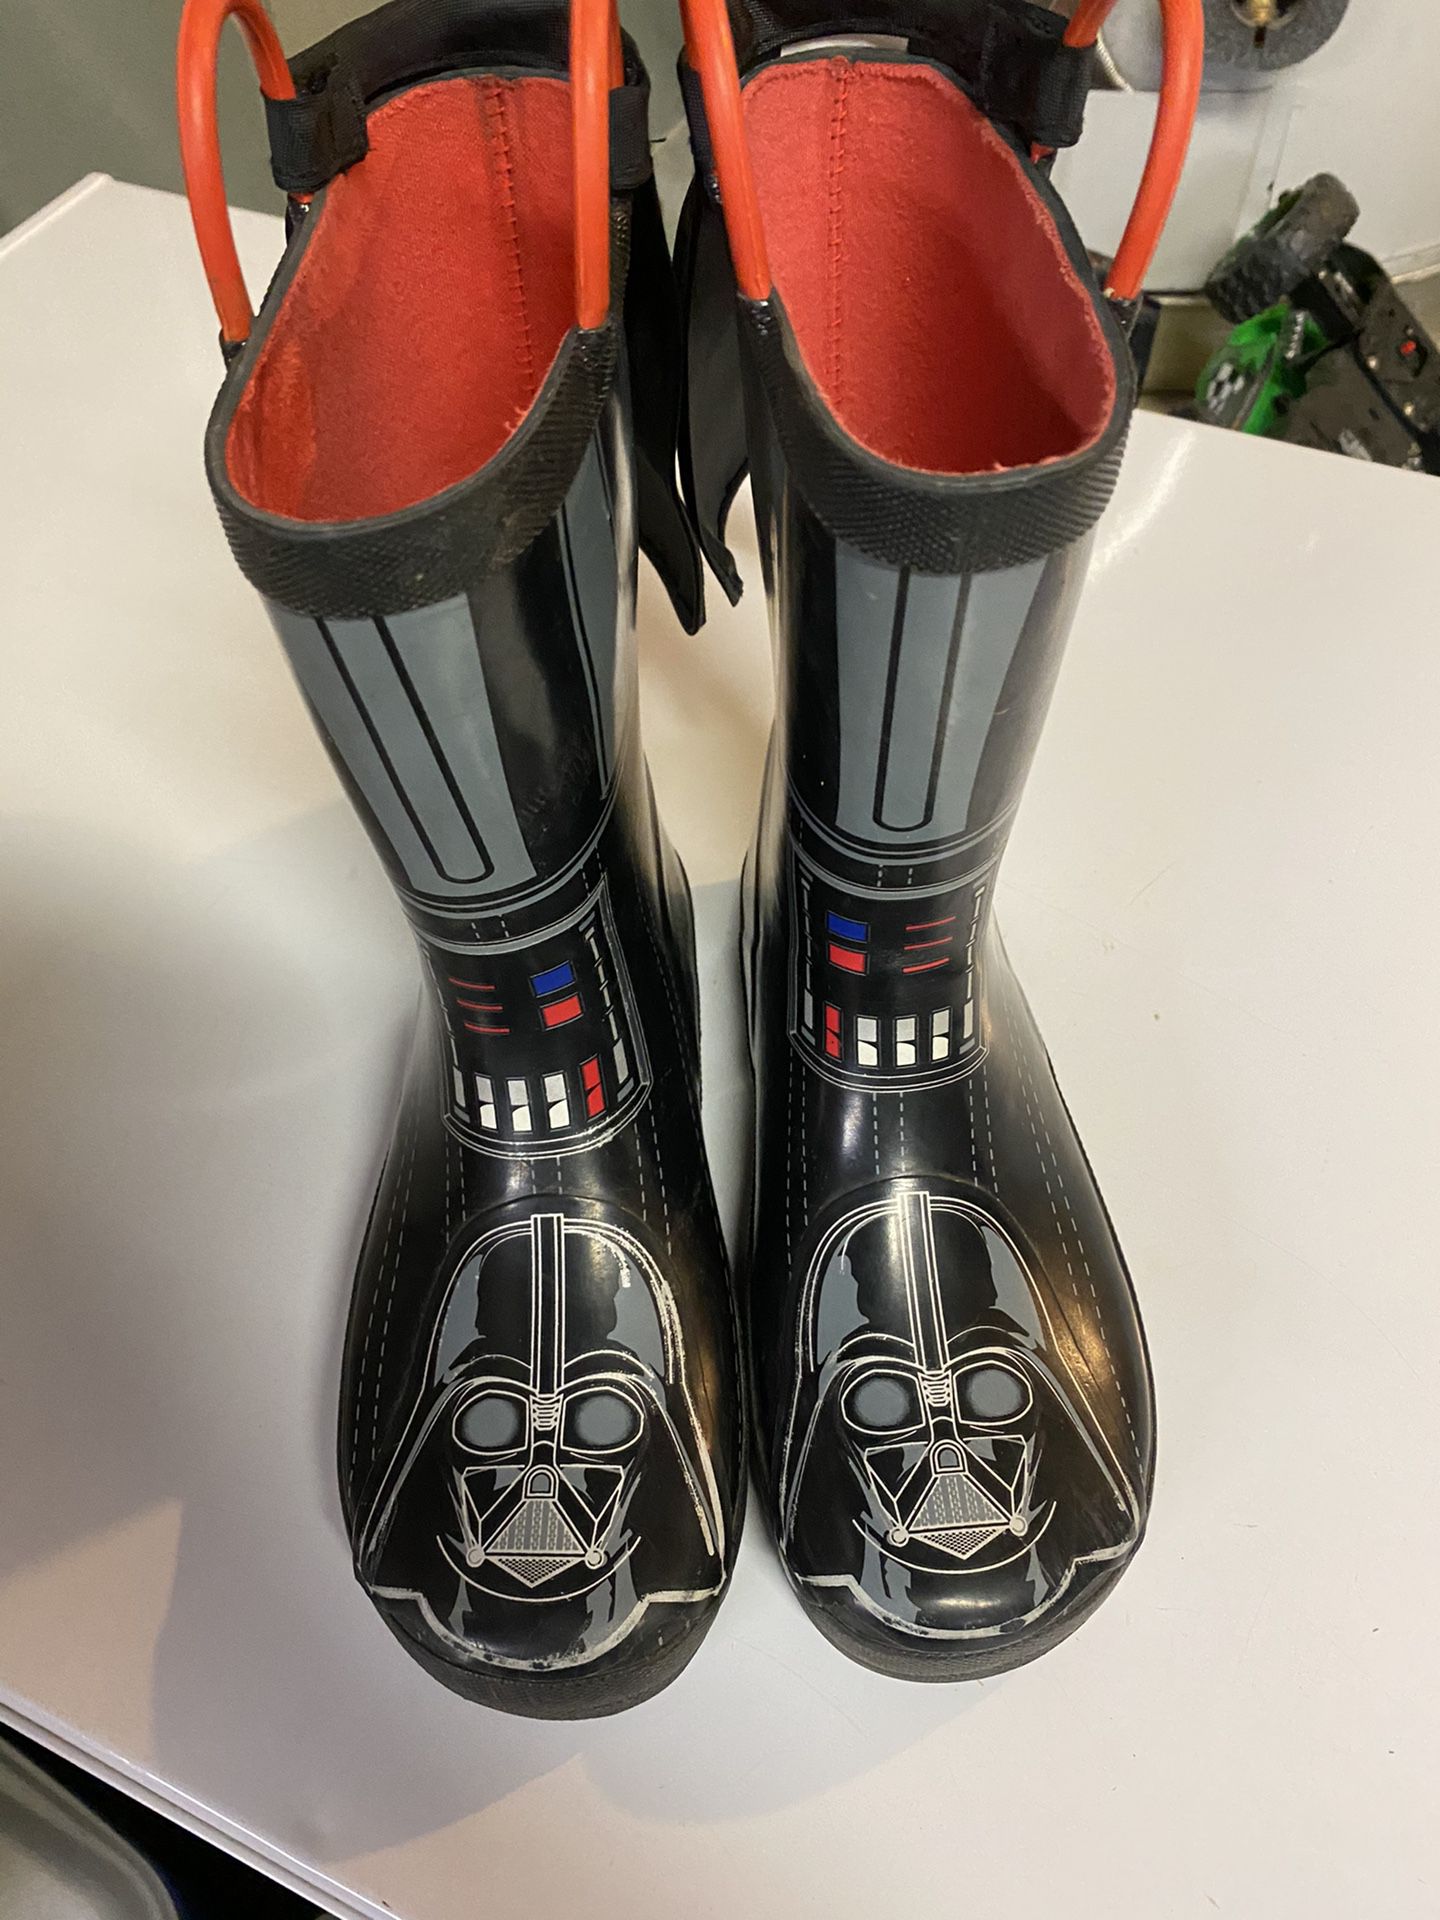 Darth Vader Rain boots size 2